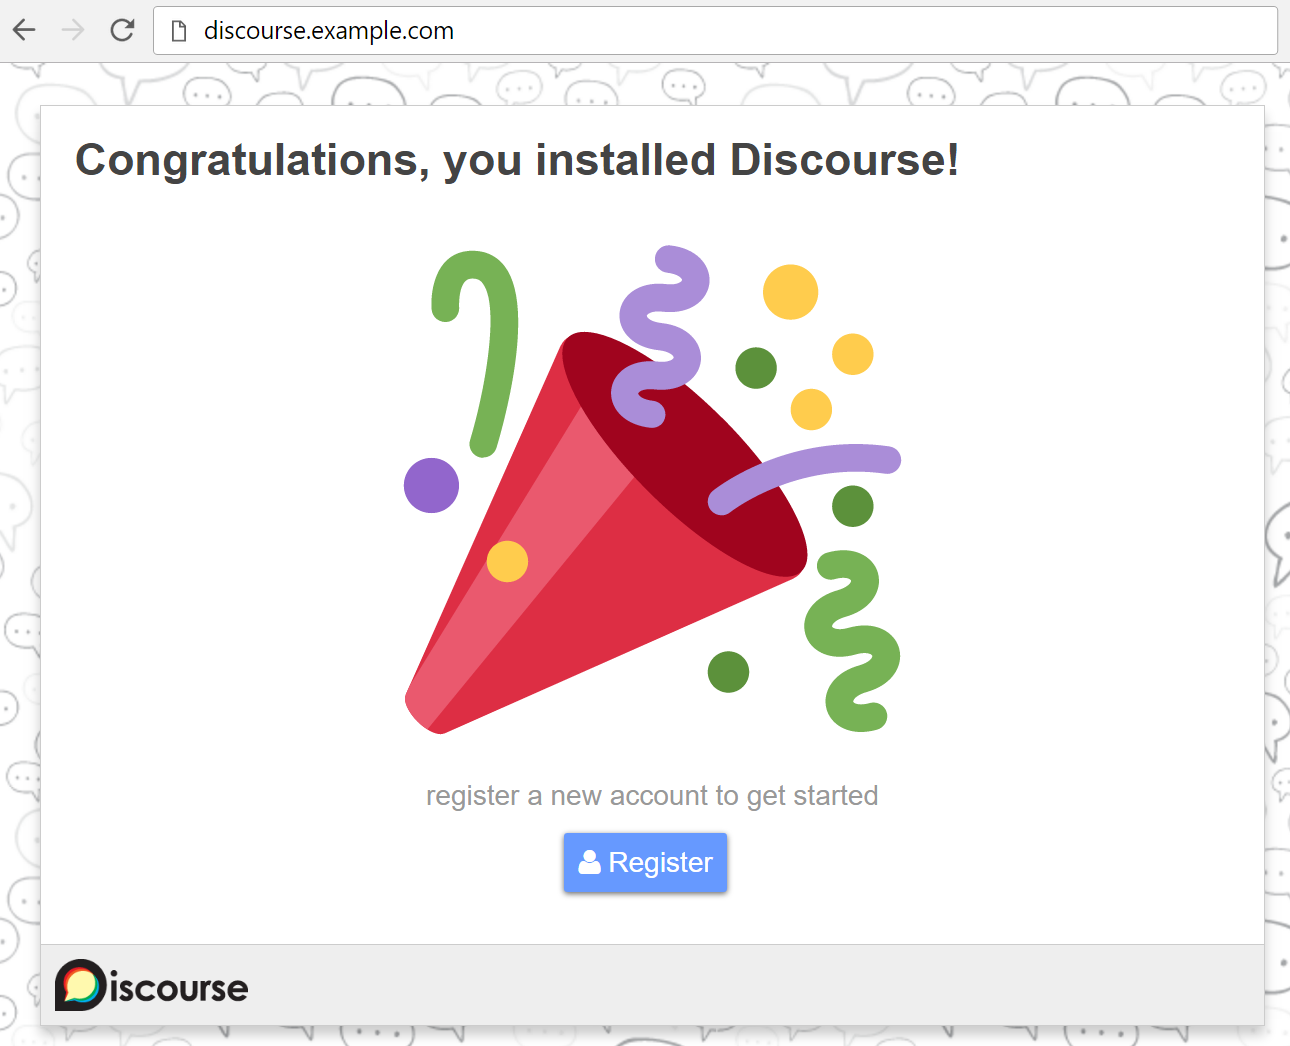 Congratulations, you installed Discourse!